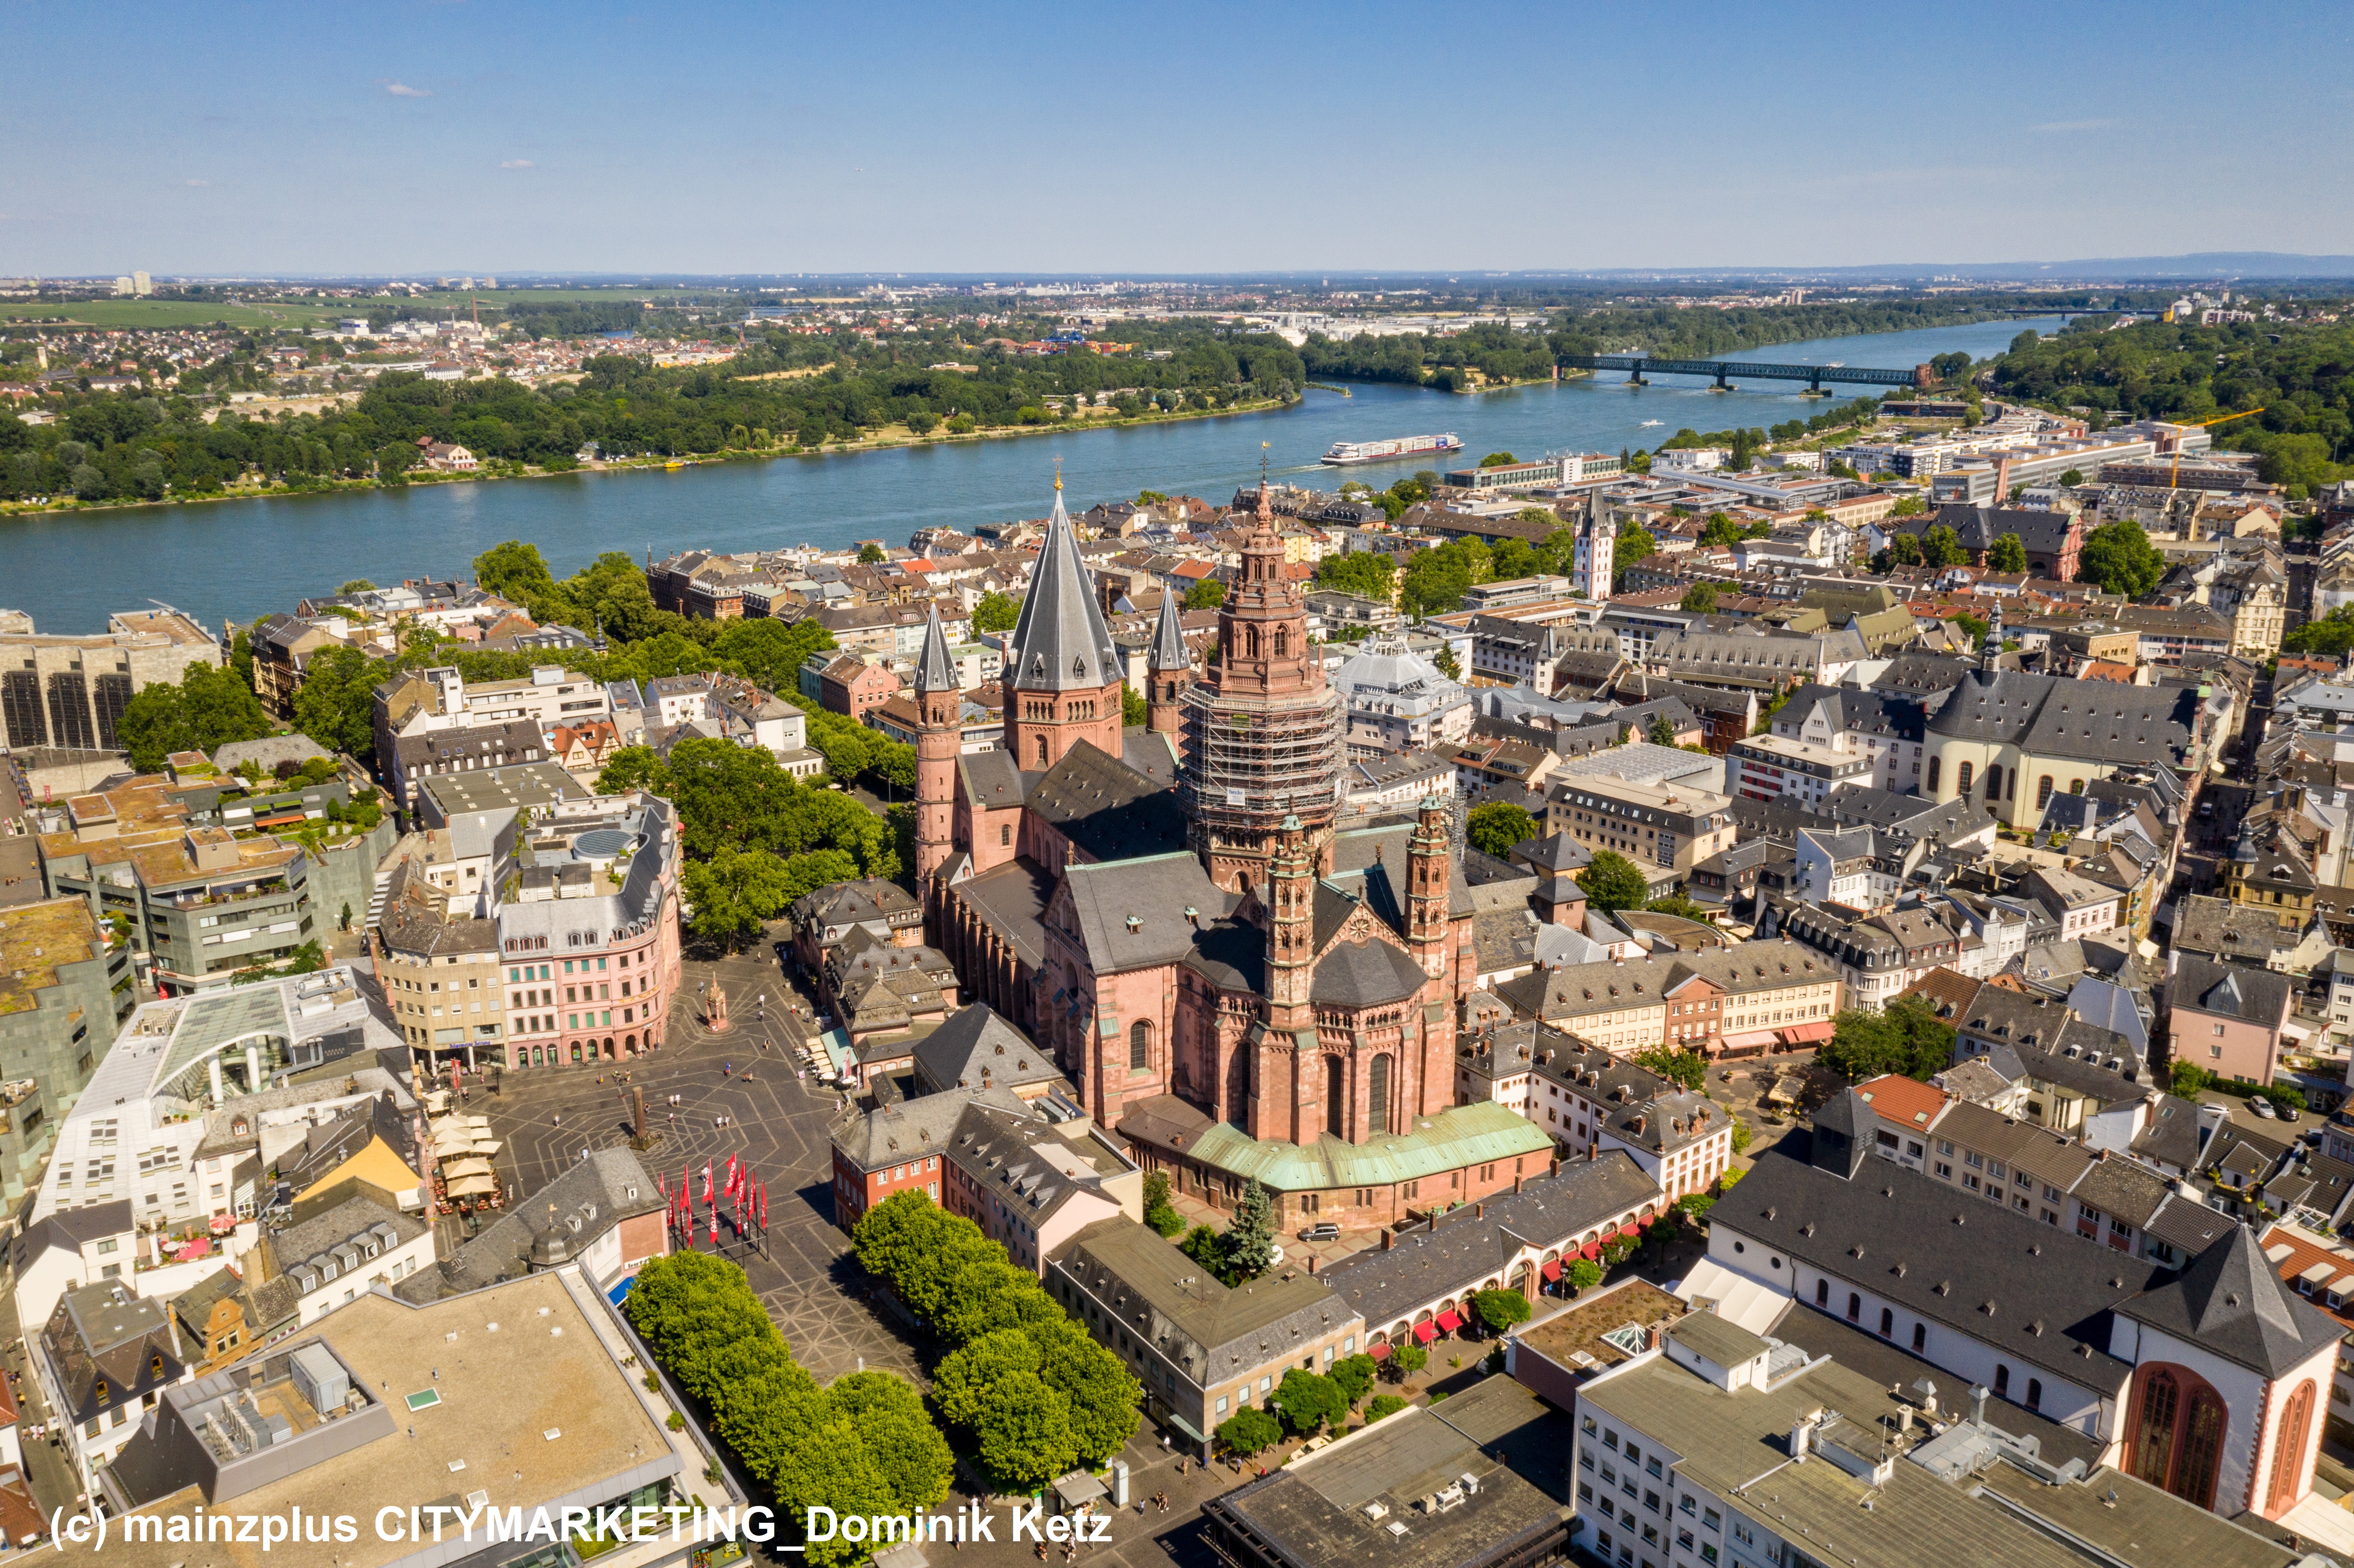 Beautiful City of Mainz